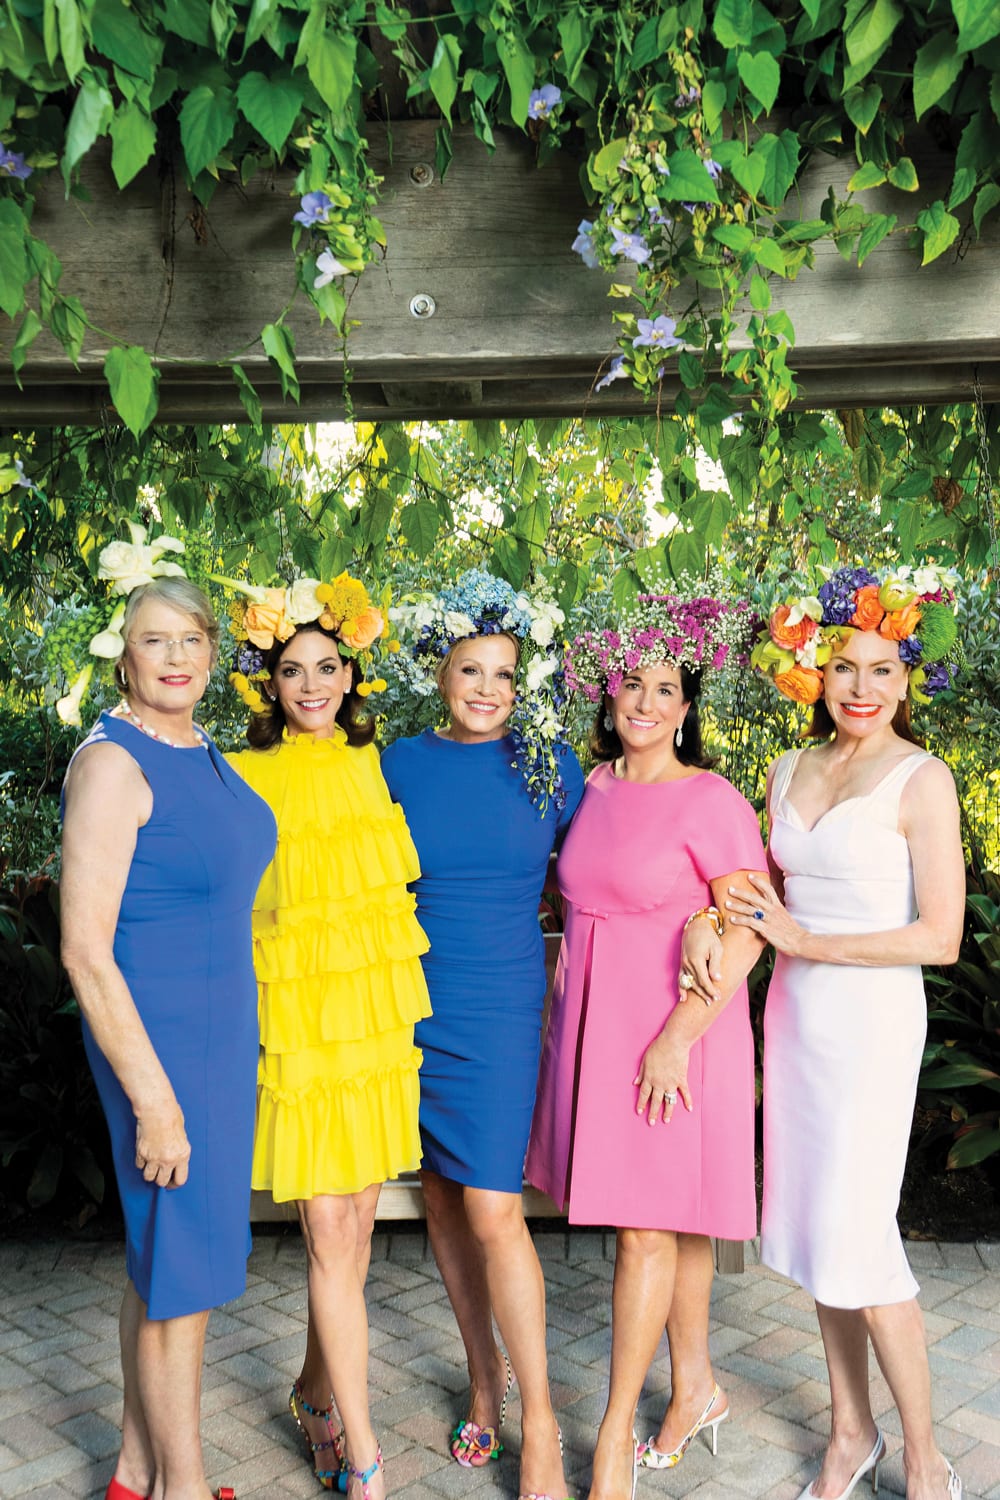 Naples Social Season Blooms with Hats in the Garden